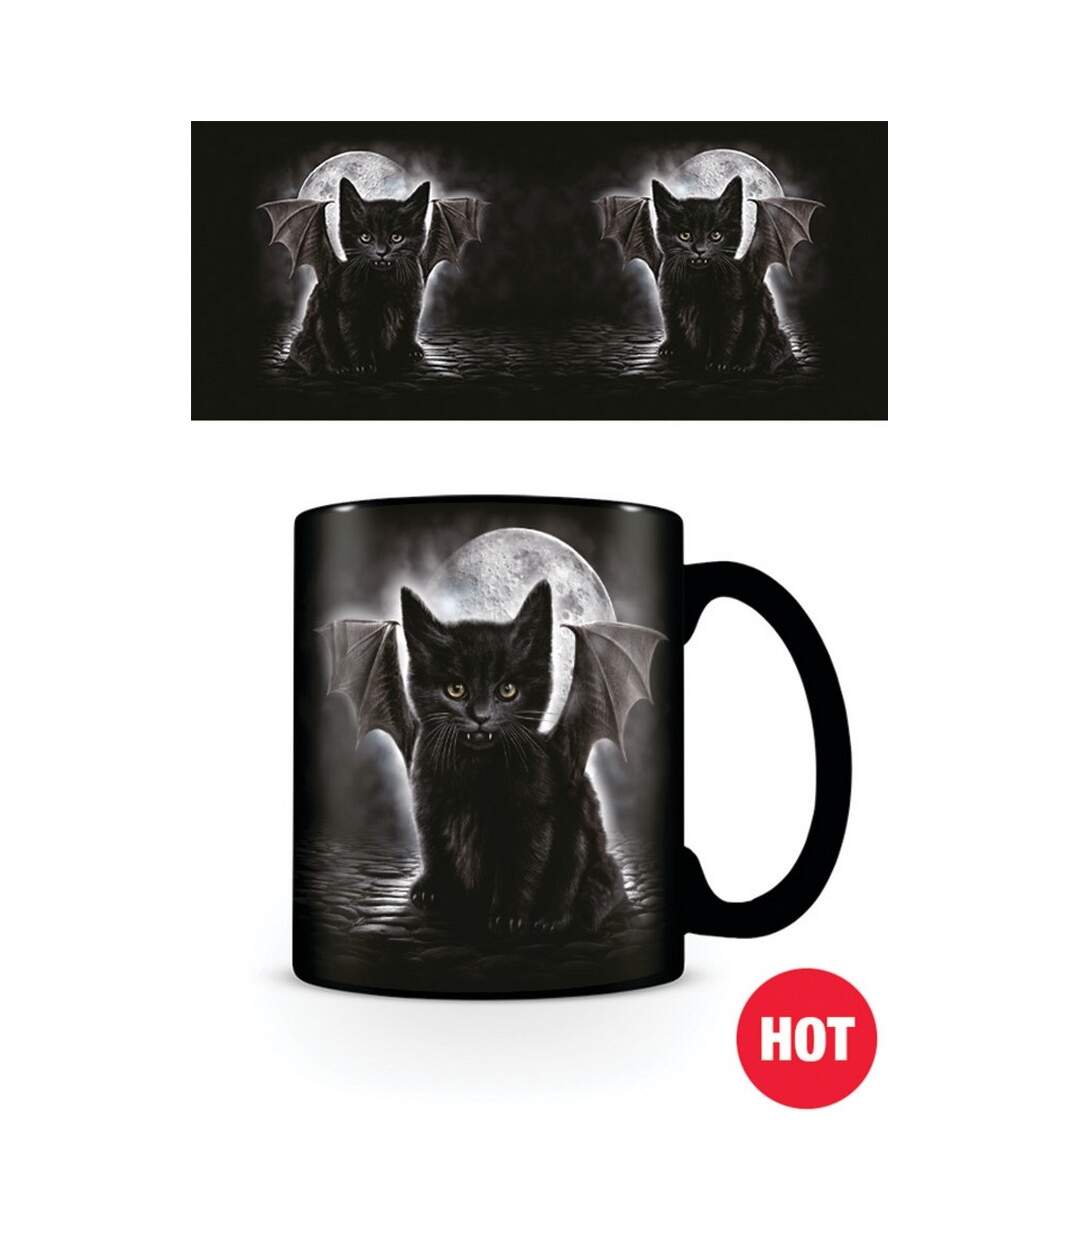 Spiral Tasse à chaleur changeante Bat Cat (Noir) (Taille unique) - UTPM131